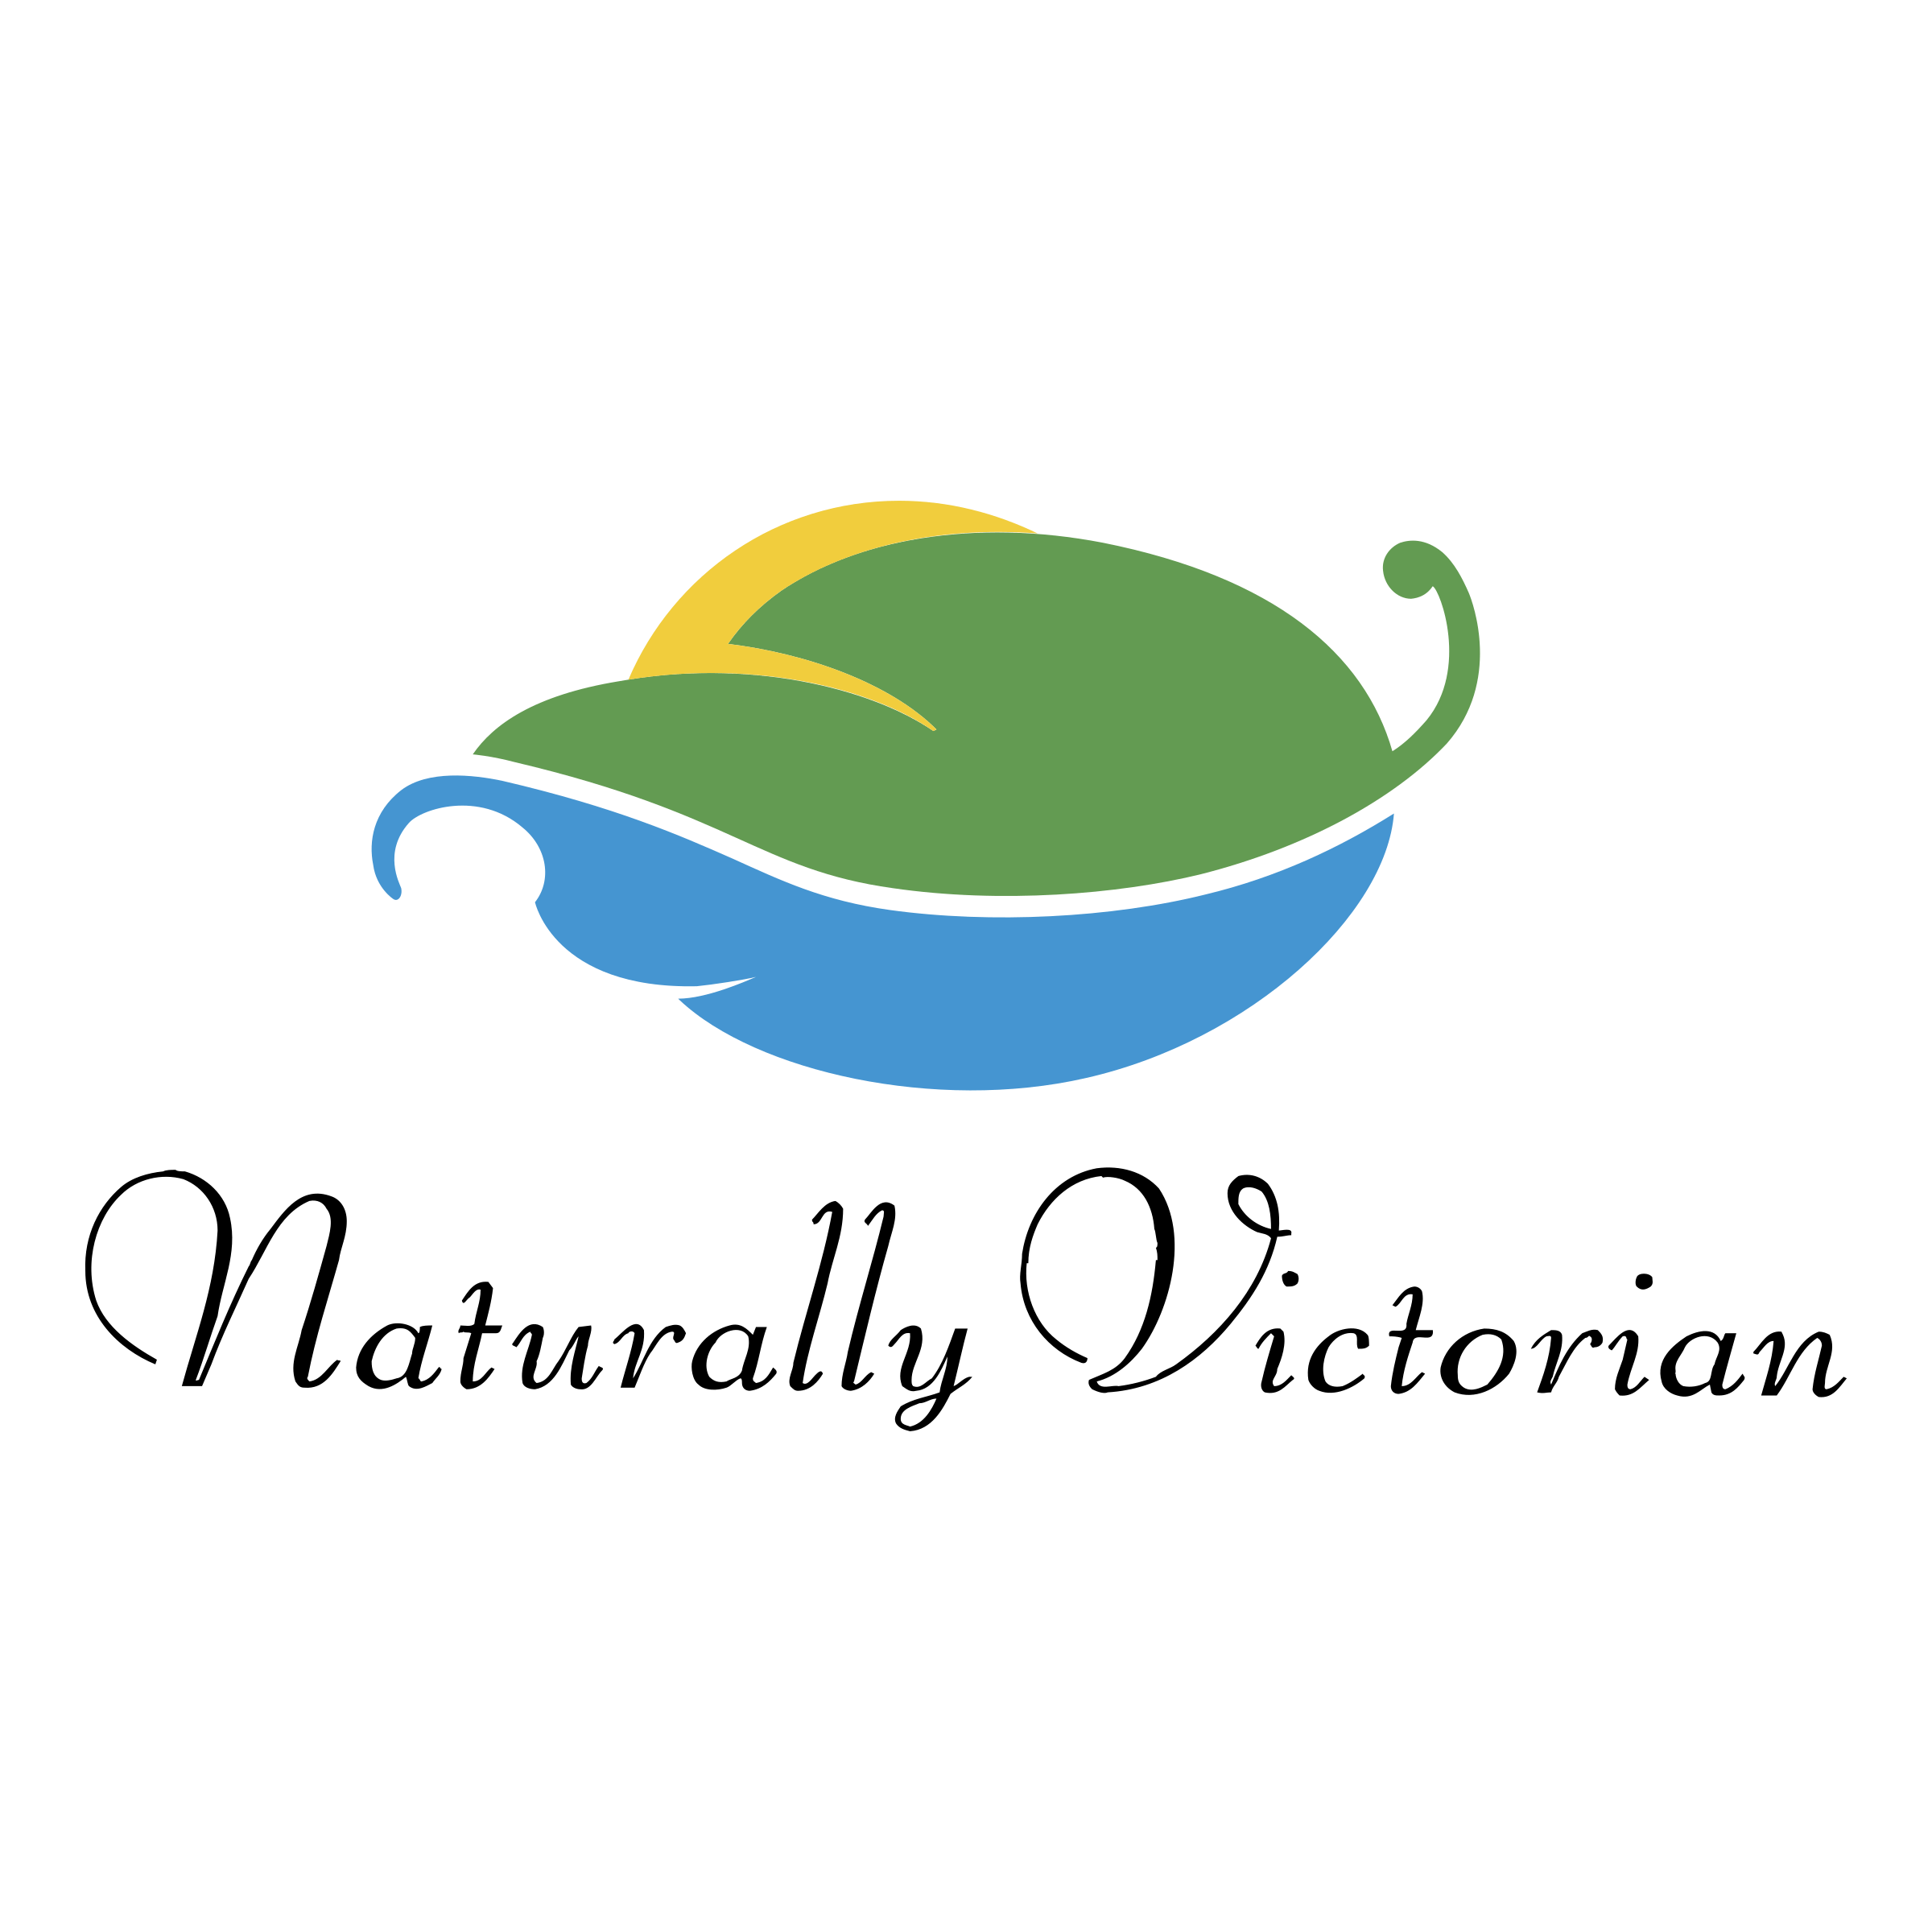 Victorian Logo - Naturally Victorian Logo PNG Transparent & SVG Vector - Freebie Supply